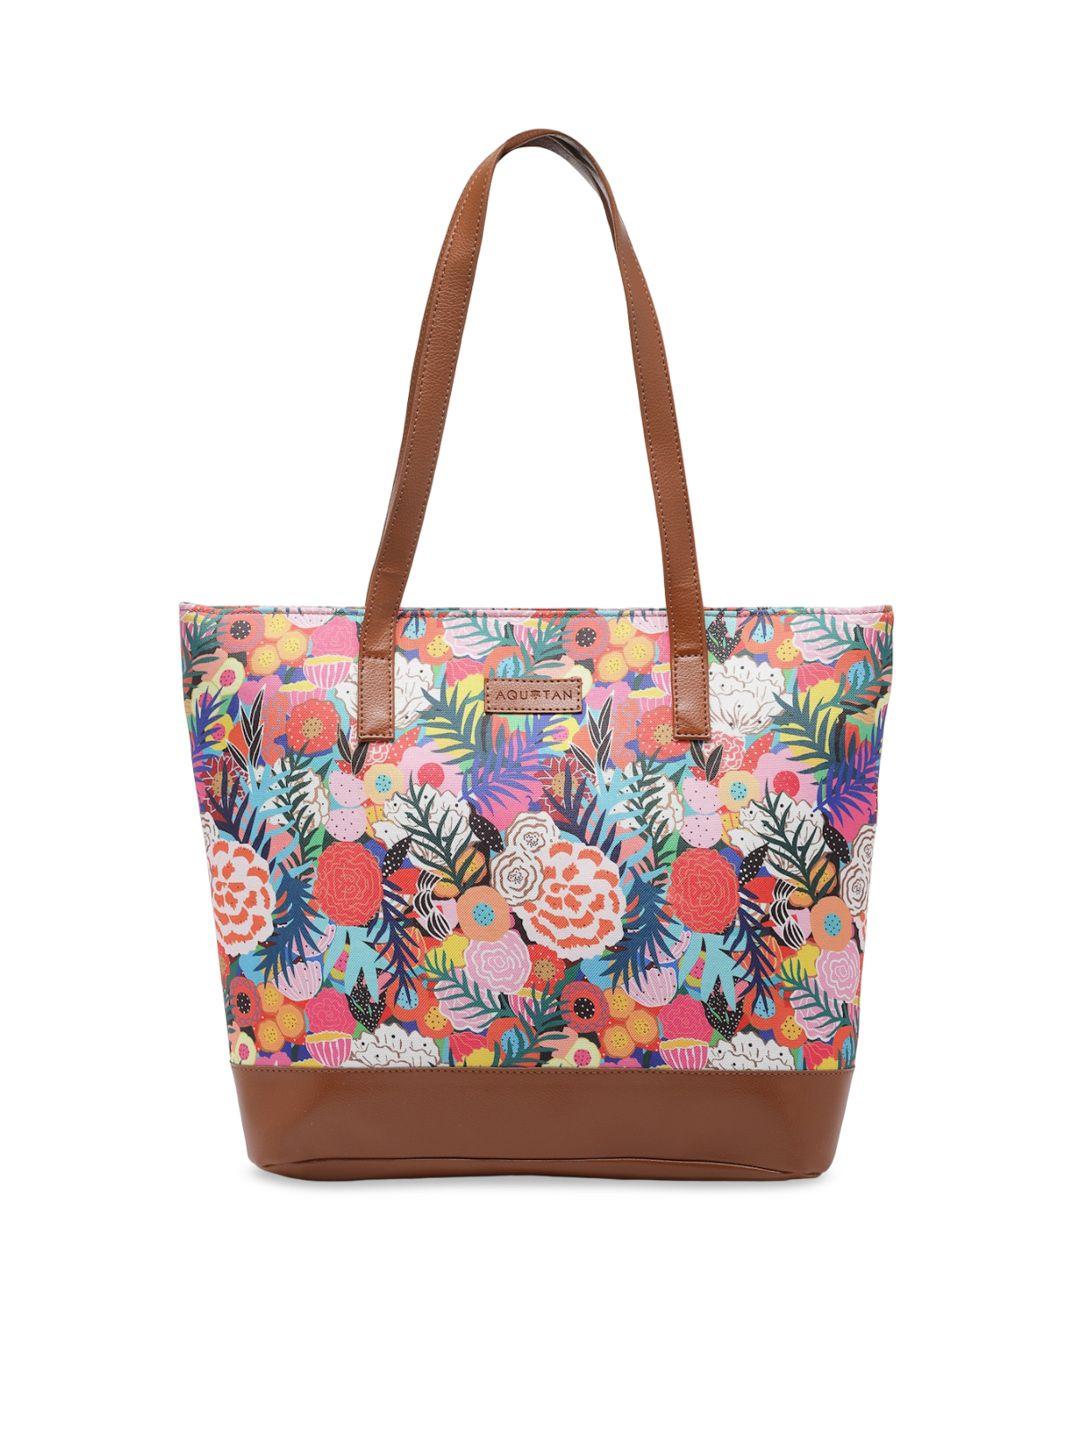 aquatan tan floral printed pu structured shoulder bag